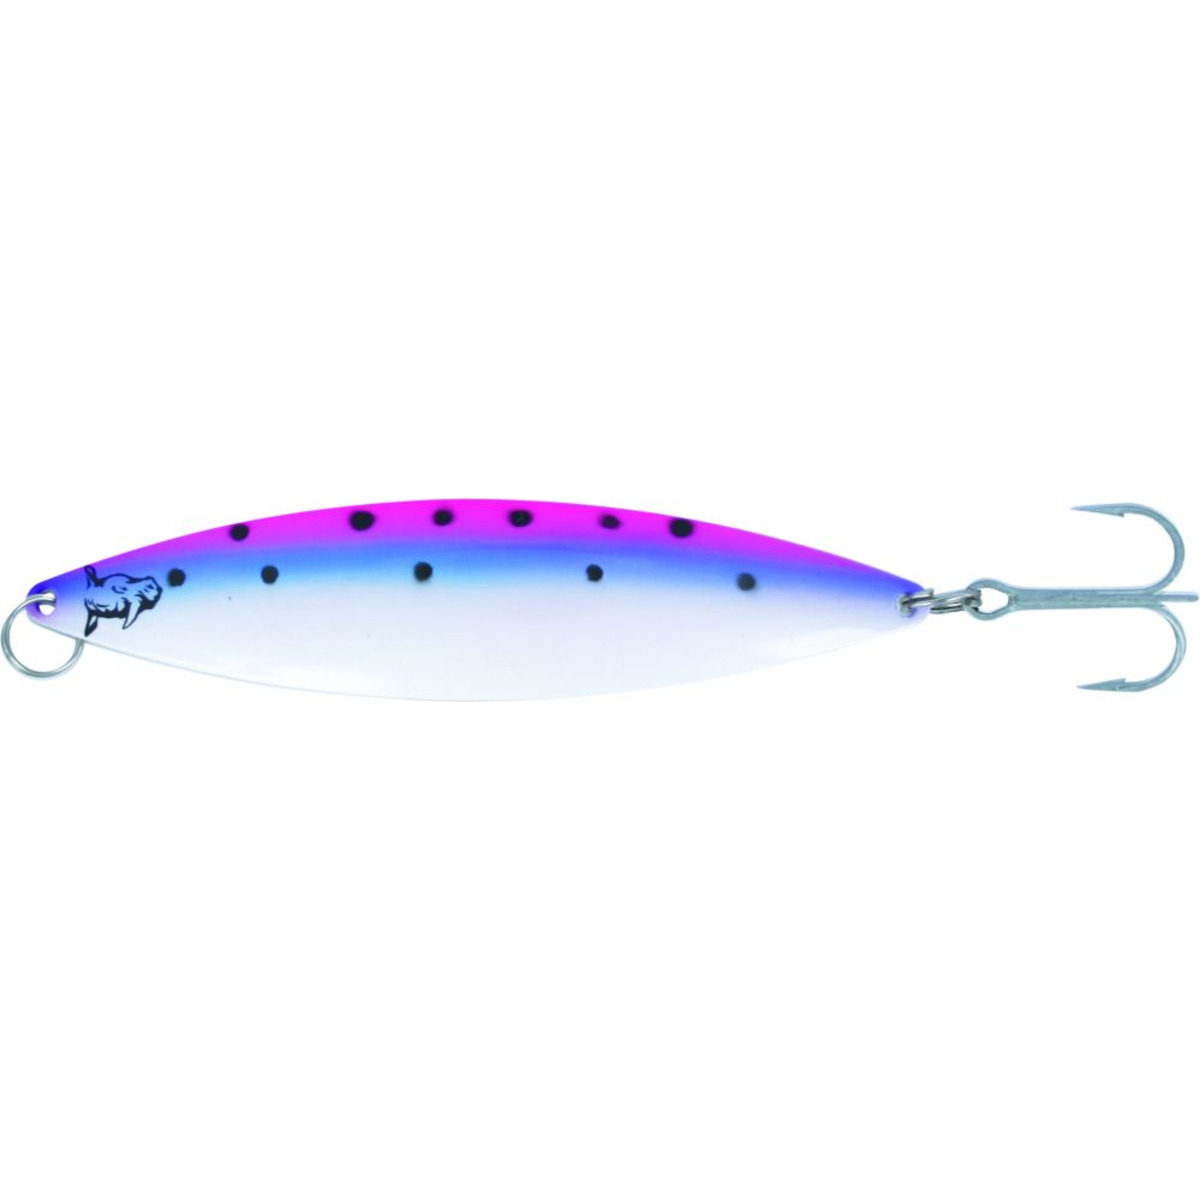 Rhino Lax Spoon - 18 g - rainbow trout